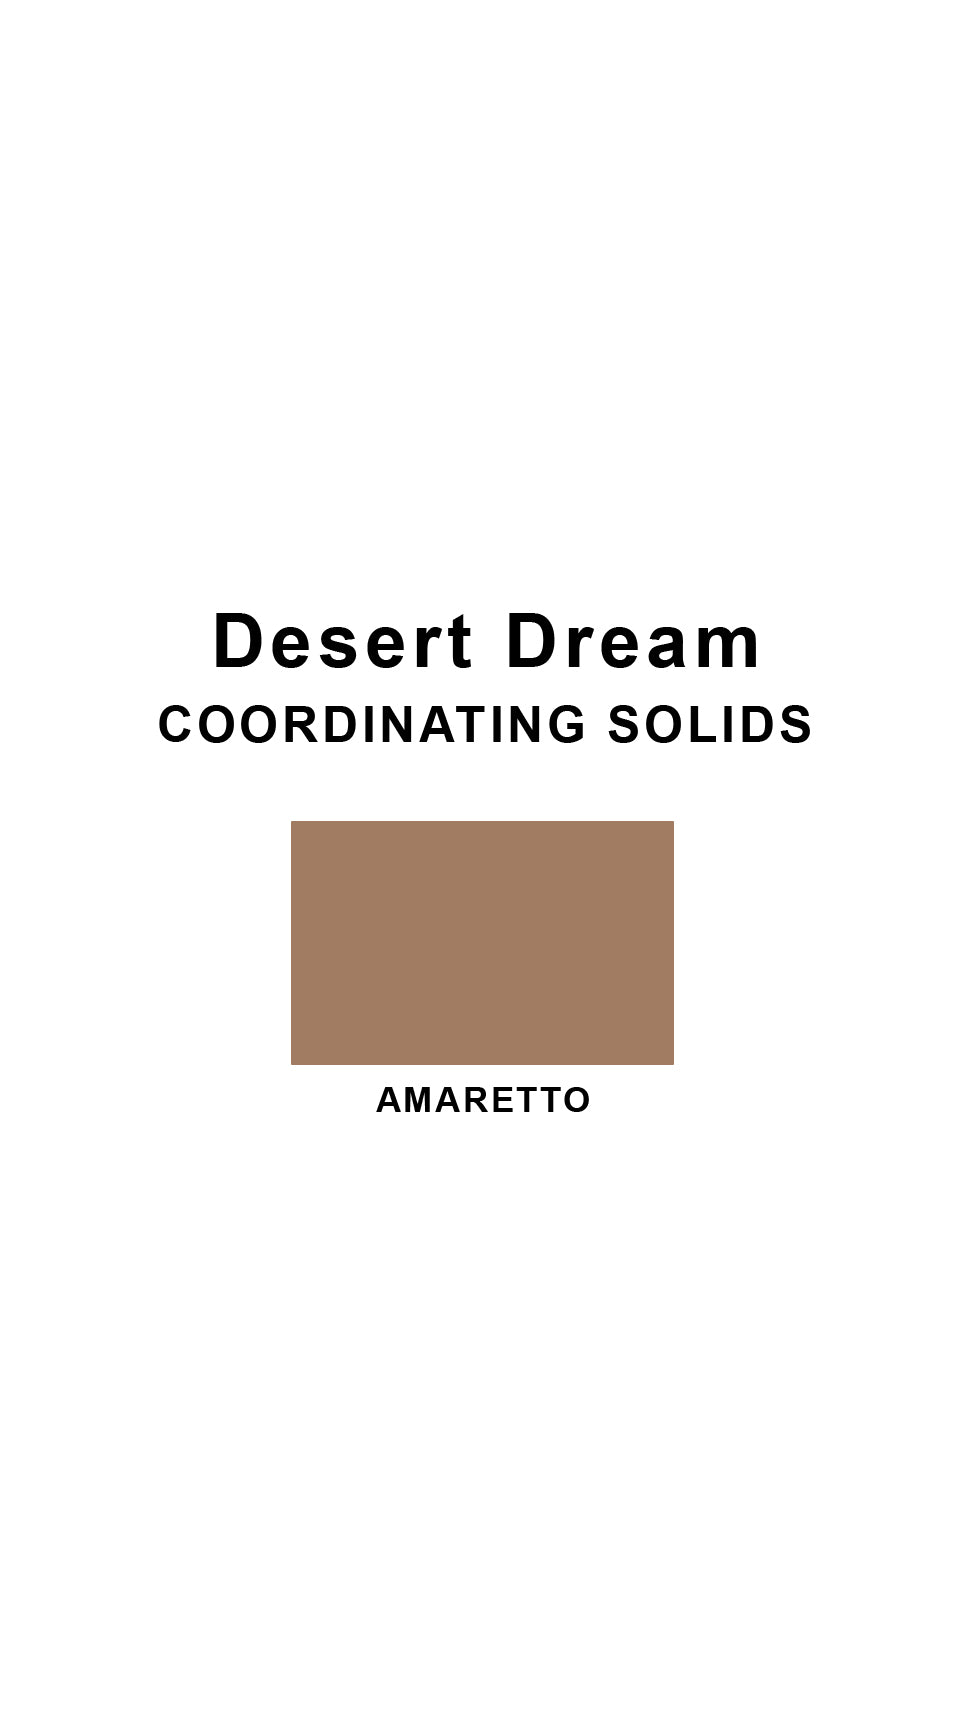 Coordinating solids chart for Desert Dream swimsuit print: Amaretto